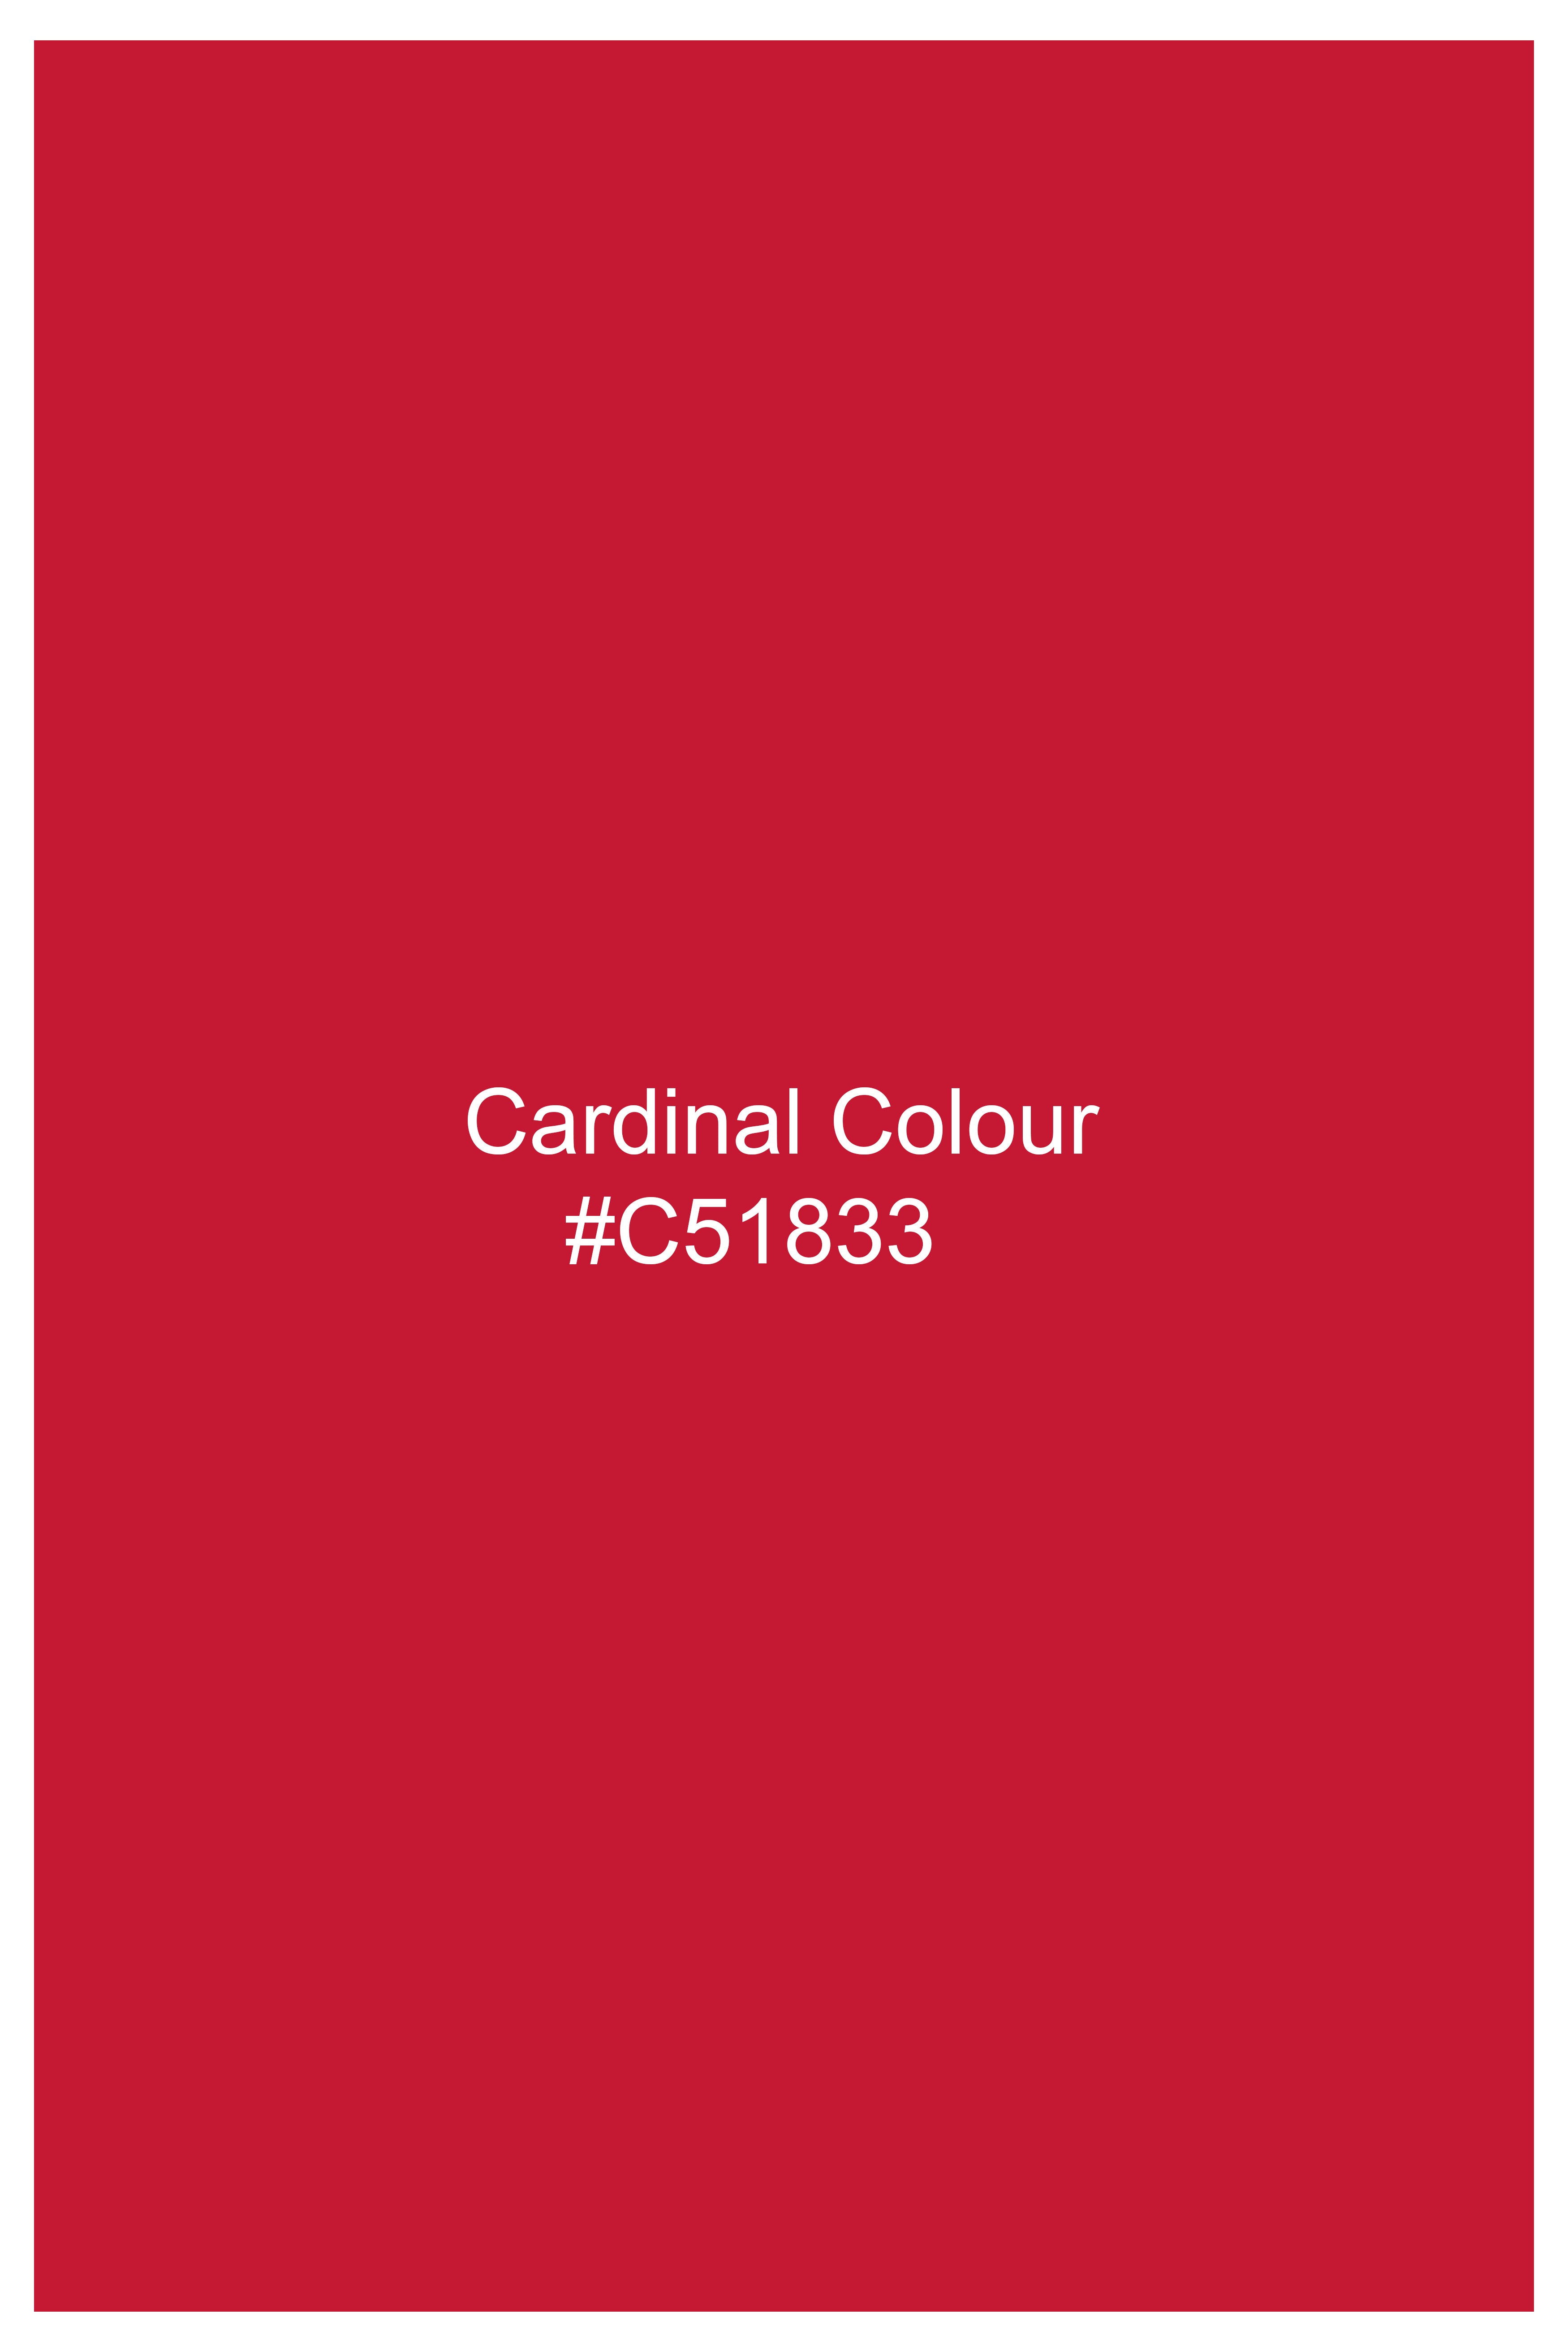 Cardinal Red Hand Painted Luxurious Linen Designer Shirt 6181-BLE-ART-38, 6181-BLE-ART-H-38, 6181-BLE-ART-39, 6181-BLE-ART-H-39, 6181-BLE-ART-40, 6181-BLE-ART-H-40, 6181-BLE-ART-42, 6181-BLE-ART-H-42, 6181-BLE-ART-44, 6181-BLE-ART-H-44, 6181-BLE-ART-46, 6181-BLE-ART-H-46, 6181-BLE-ART-48, 6181-BLE-ART-H-48, 6181-BLE-ART-50, 6181-BLE-ART-H-50, 6181-BLE-ART-52, 6181-BLE-ART-H-52